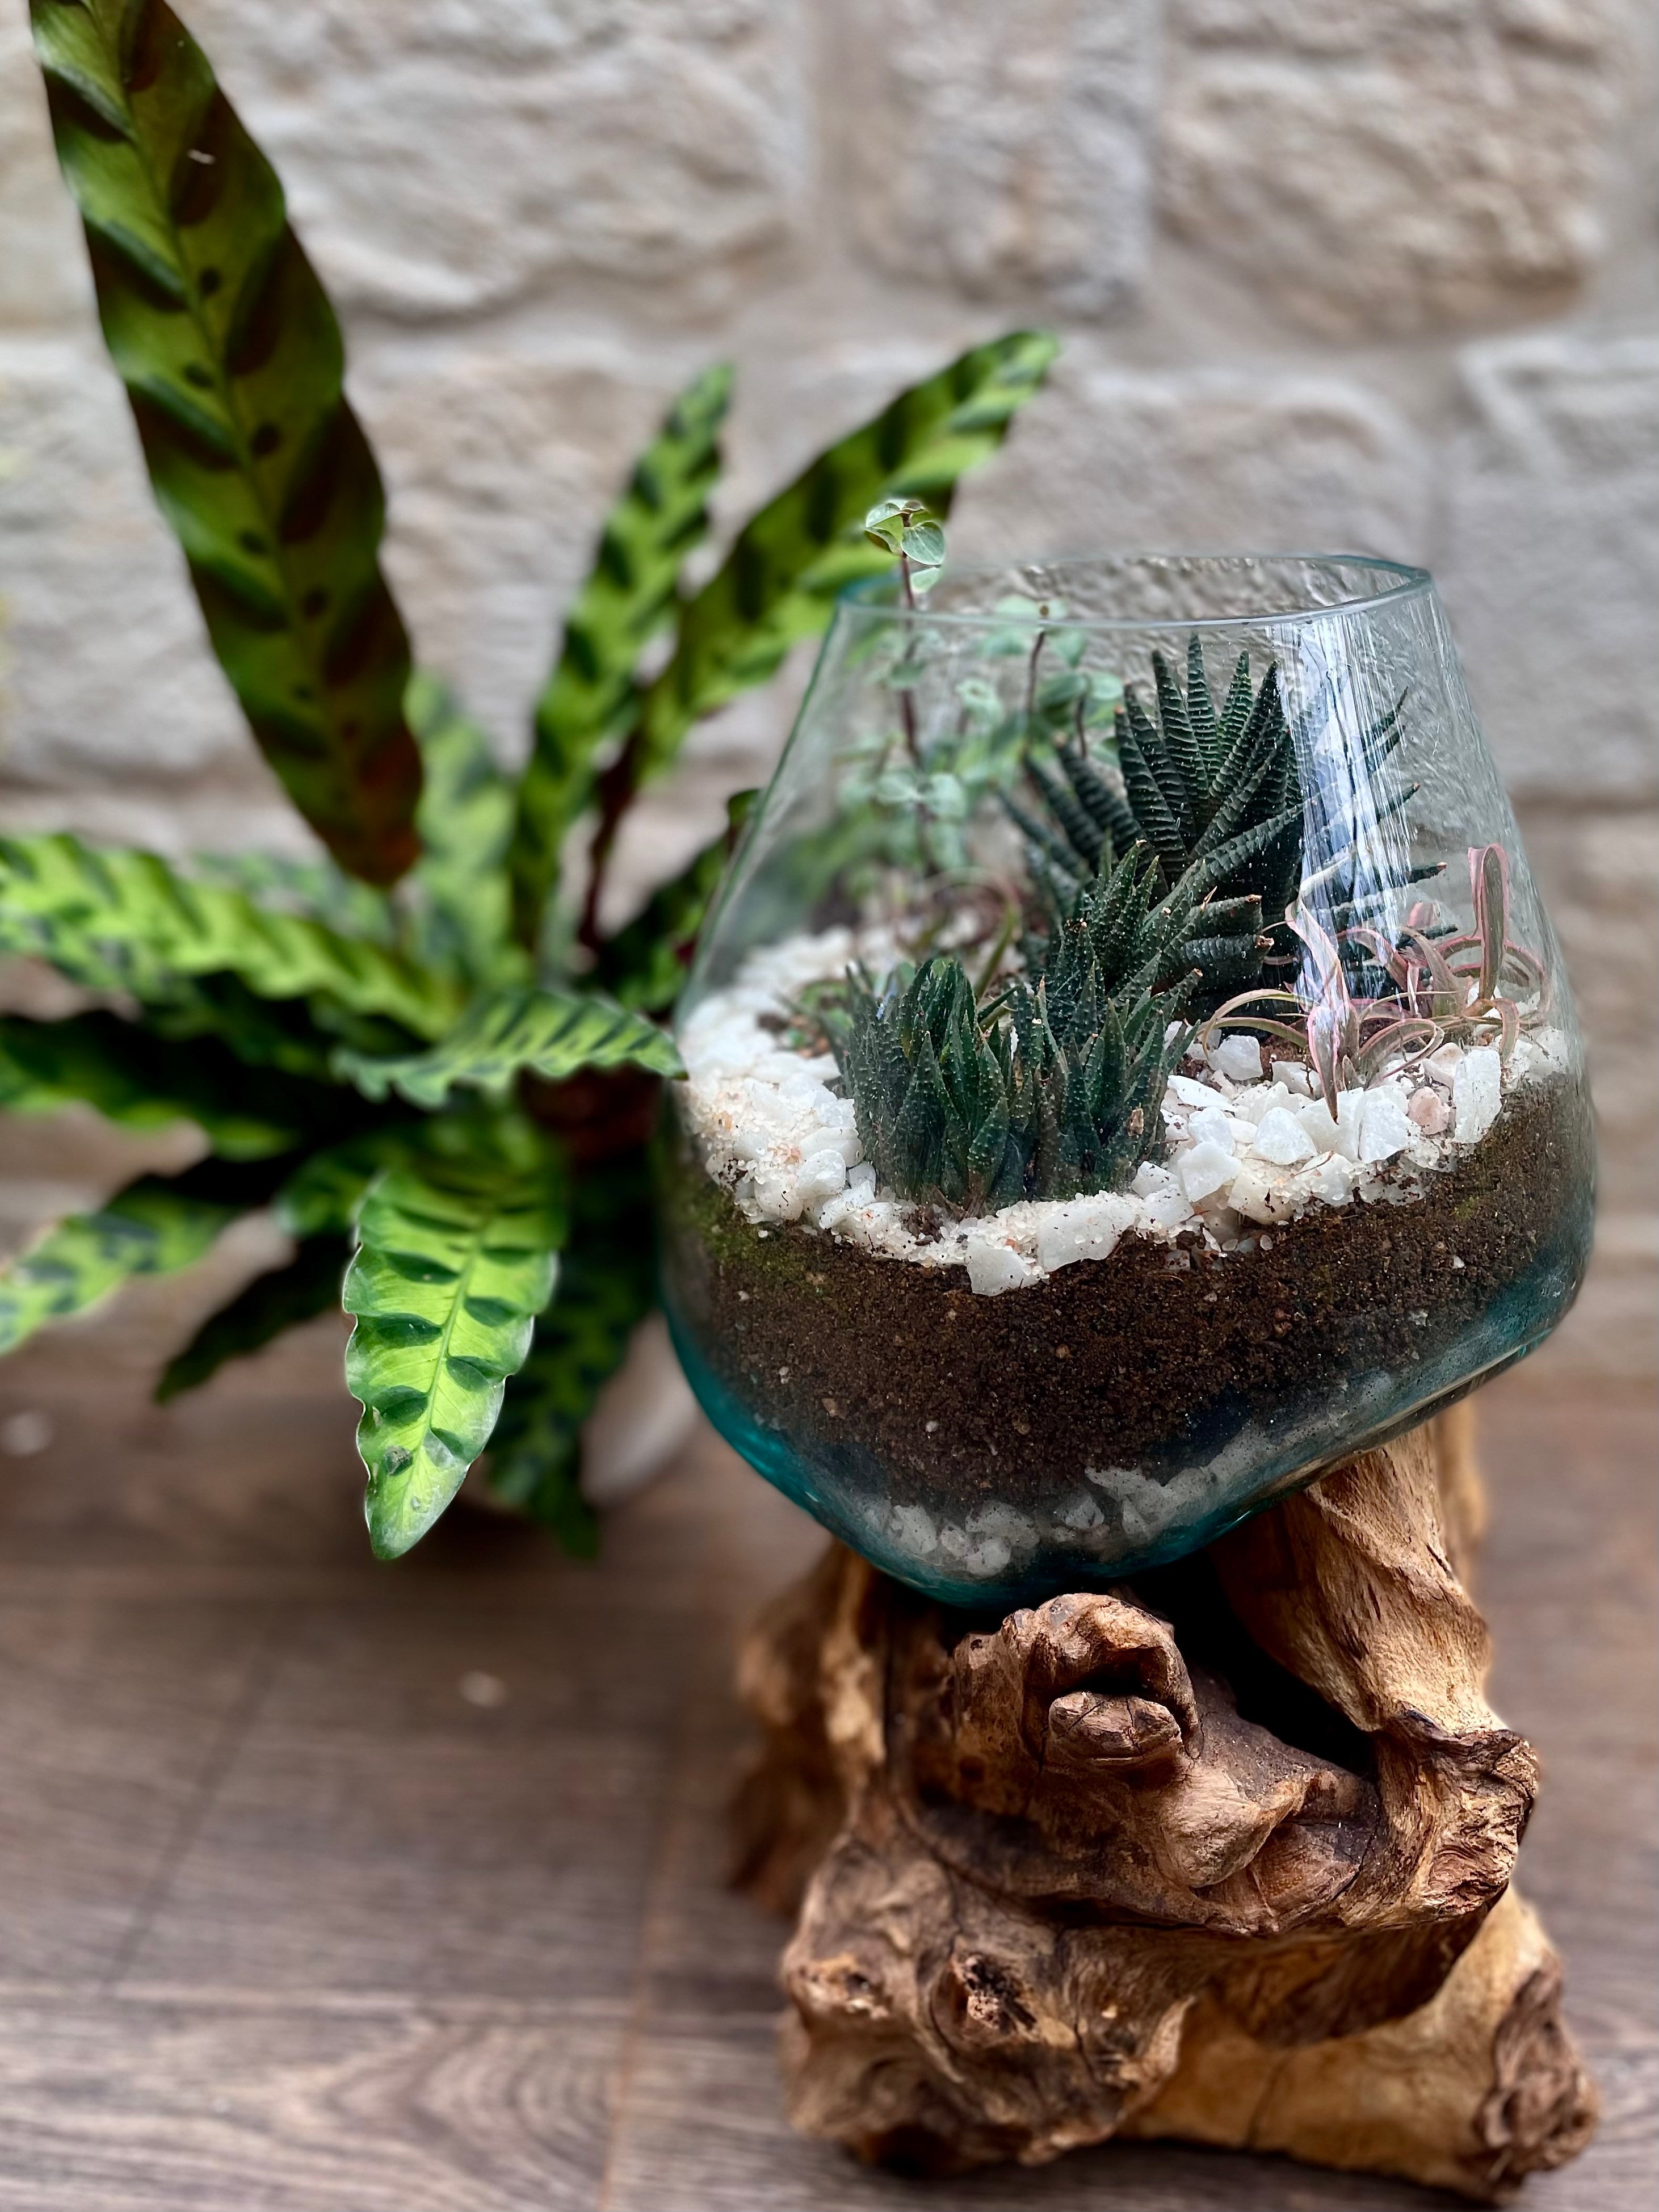 JIVA BOWLS - 20cm - Glass vase / Terrarium / Candle holder / Crystal holder / Flower vase/ Fish tank / Bonsai planter / coffee table décor. - Sculptree